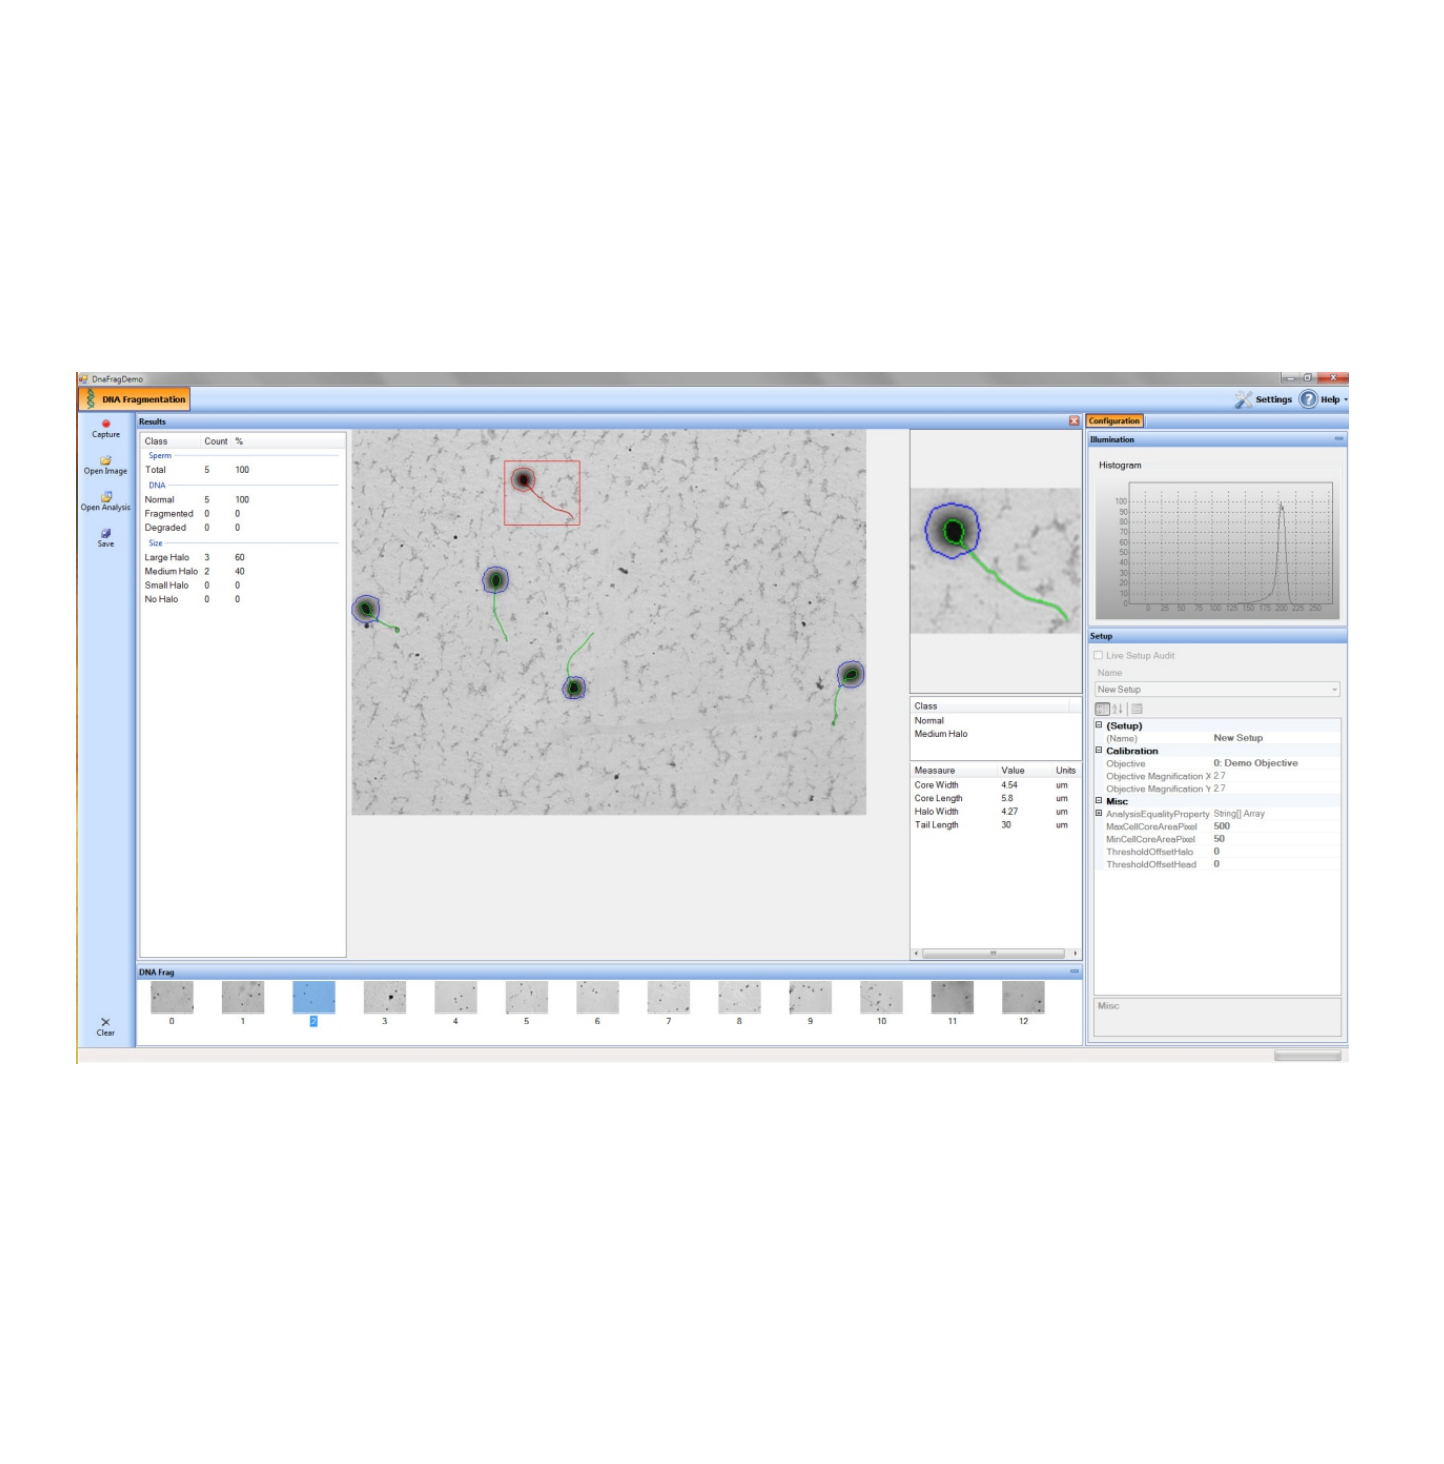 Hamilton DNA Fragmentation, Automated Sperm Chromatin Dispersion Measurement Software